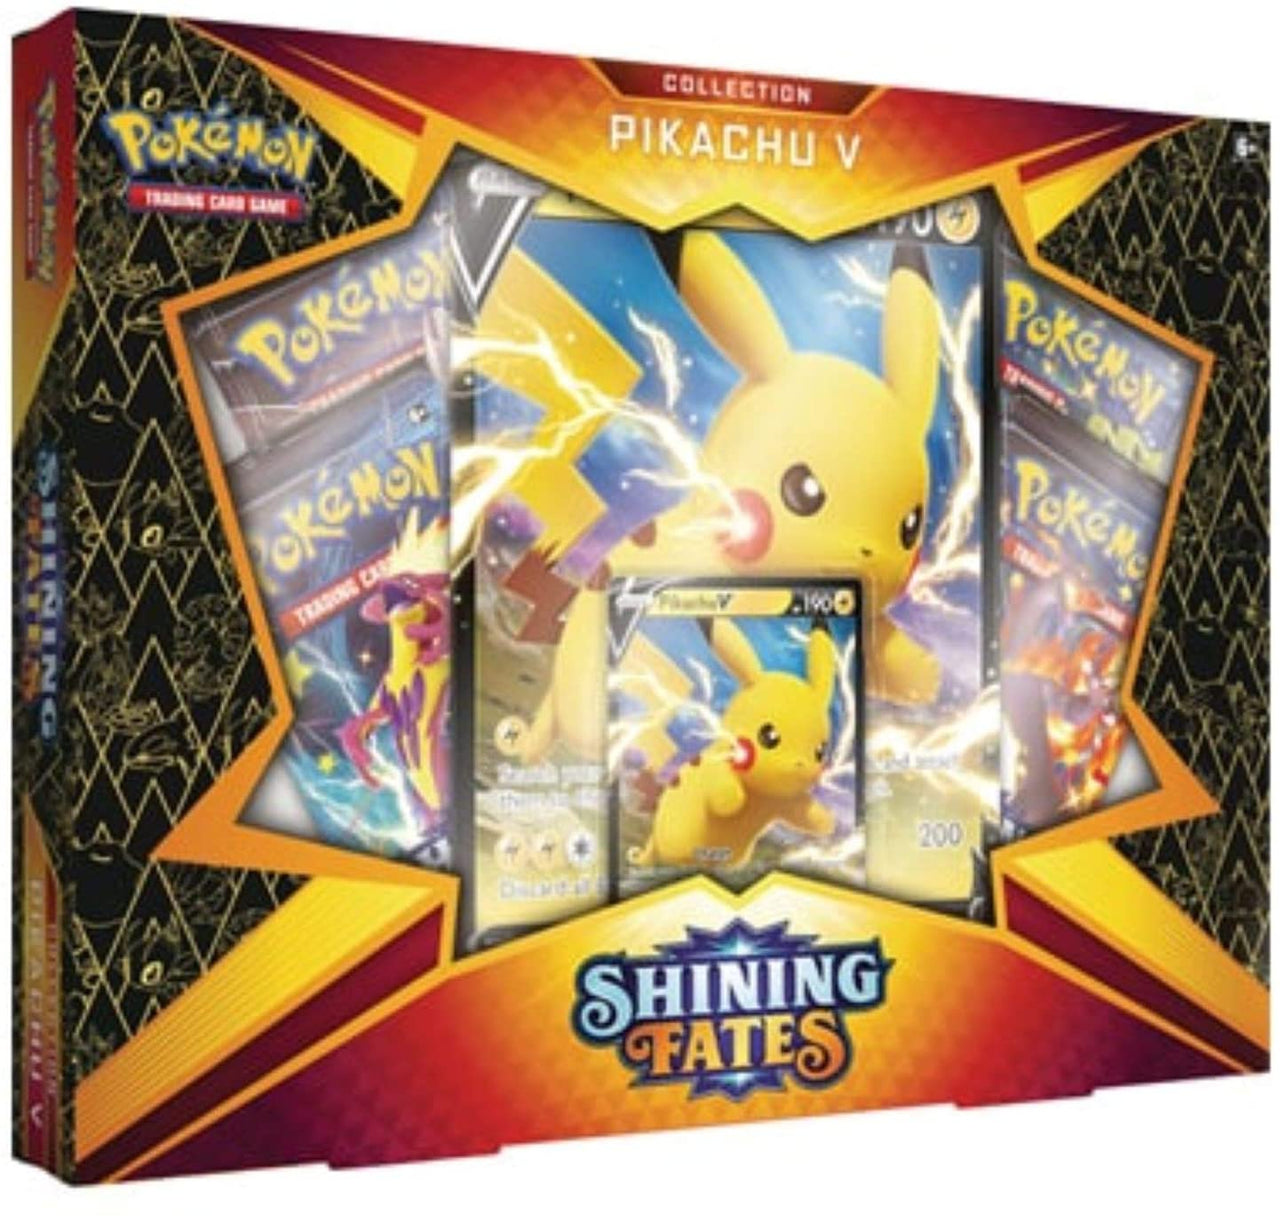 Pokémon TCG: Shining Fates - Pikachu V Collection Box - PokeRvmCollection Box